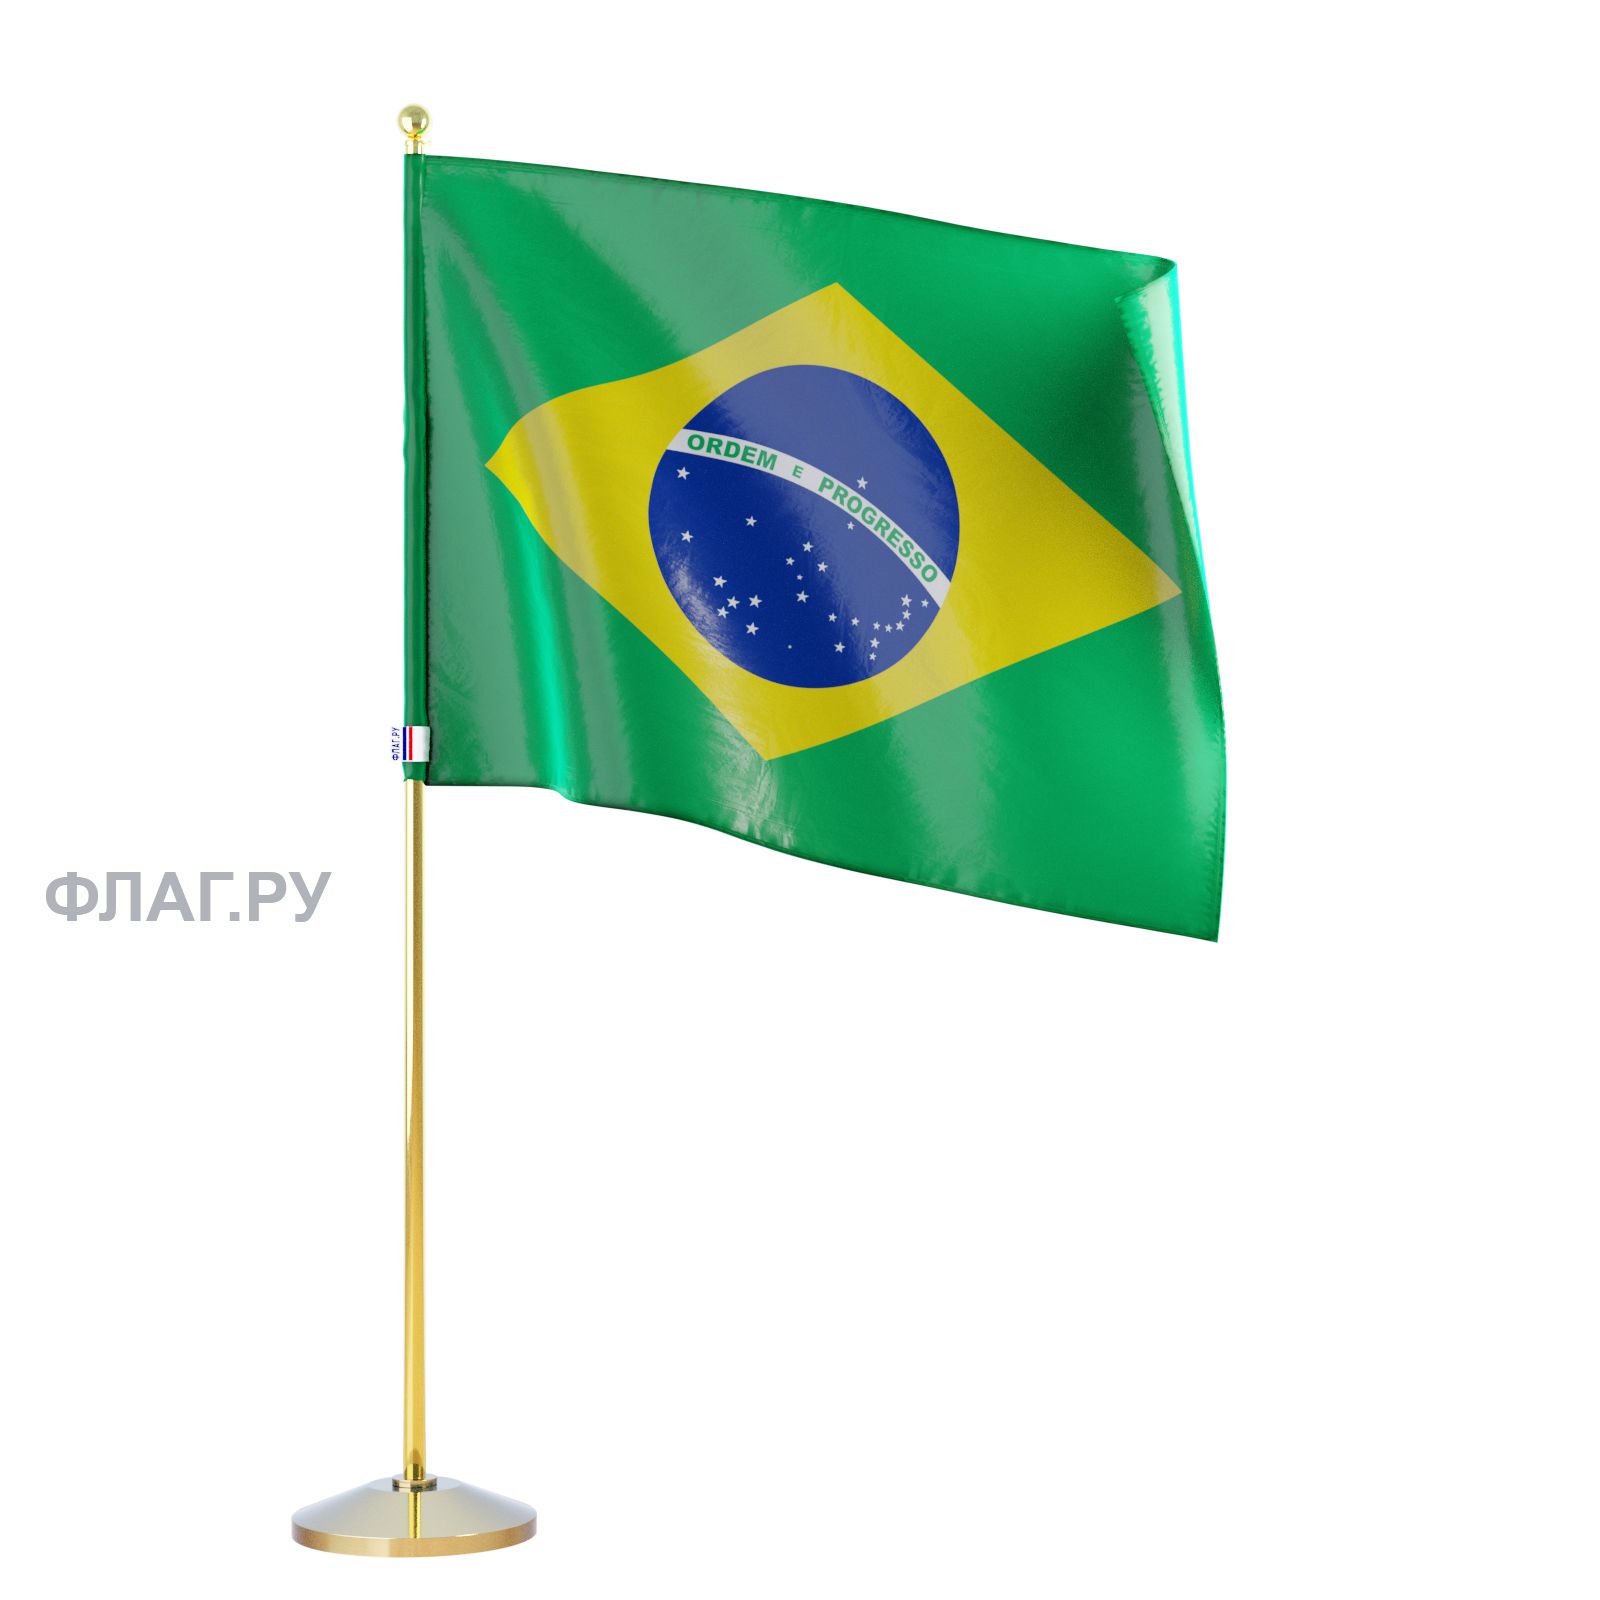 Флаг и герб бразилии фото